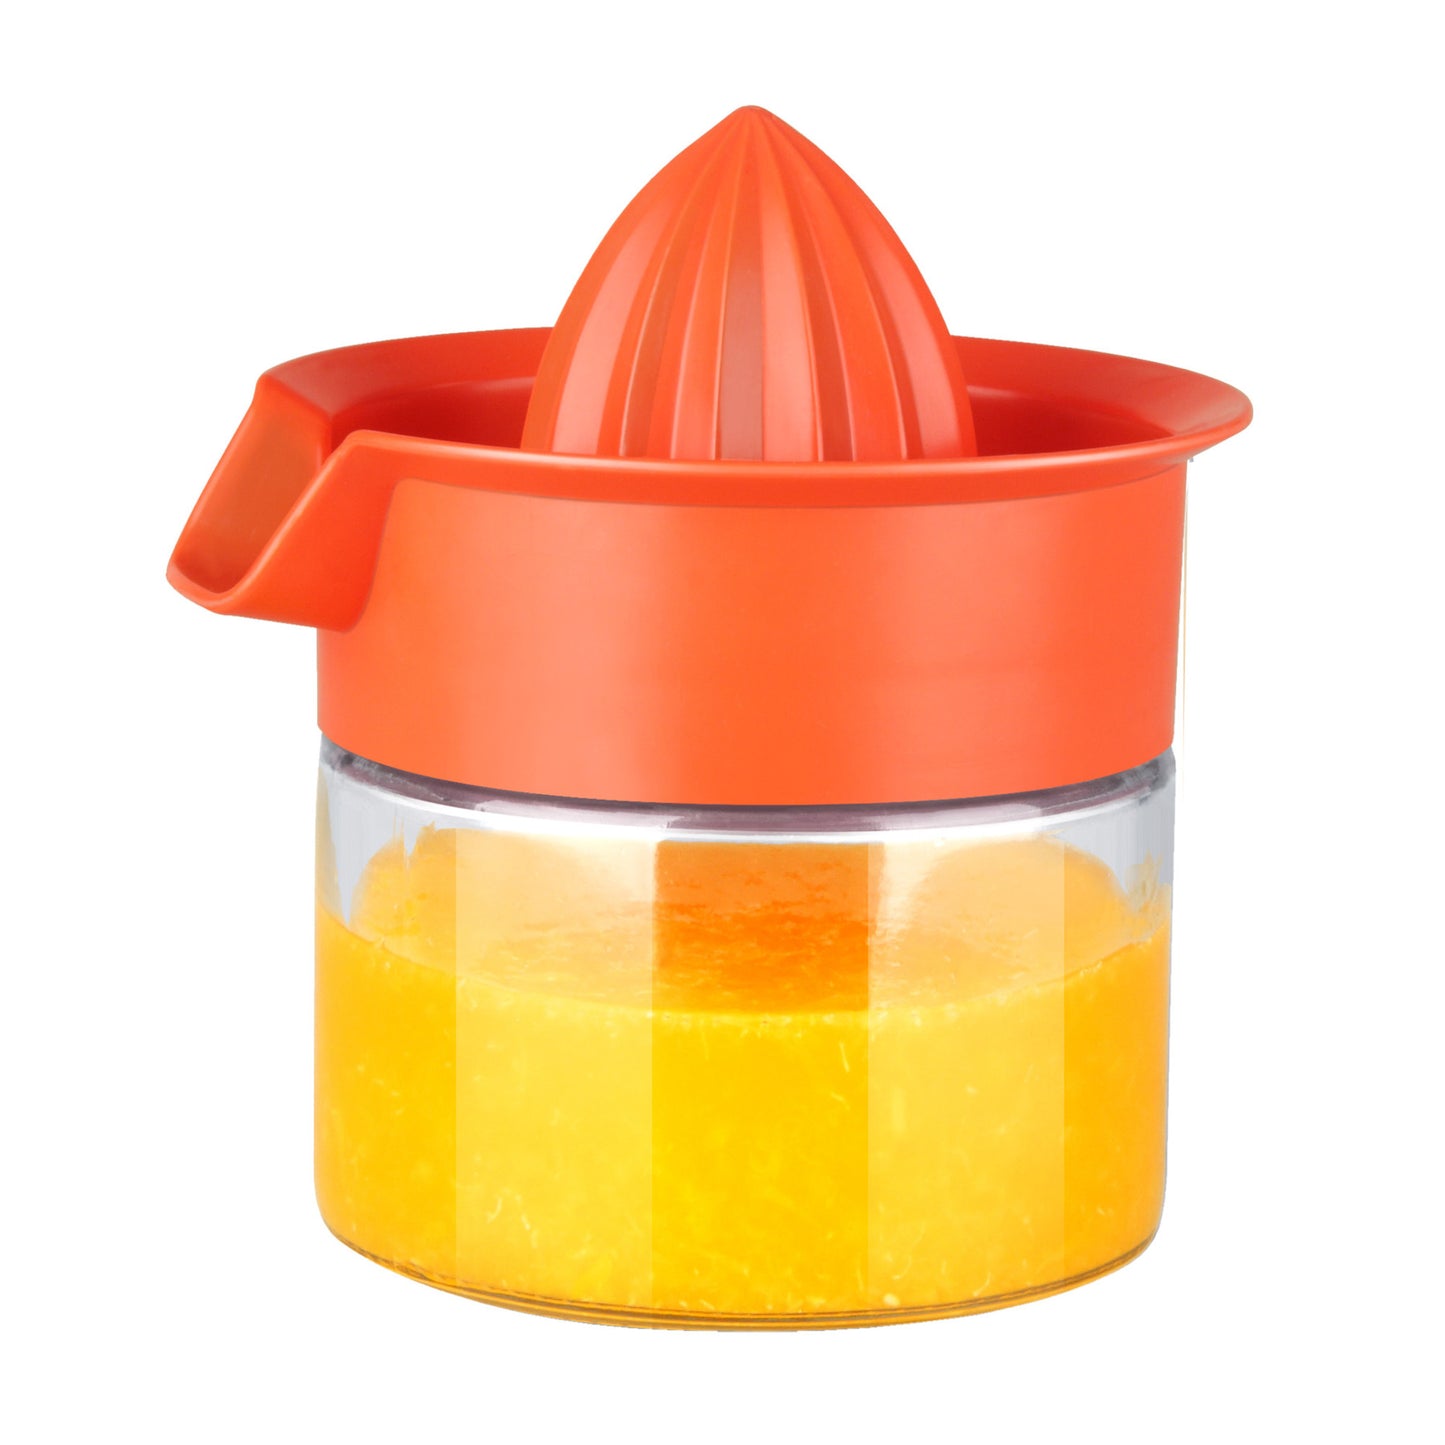 Home Basics Glass Juicer - Orange